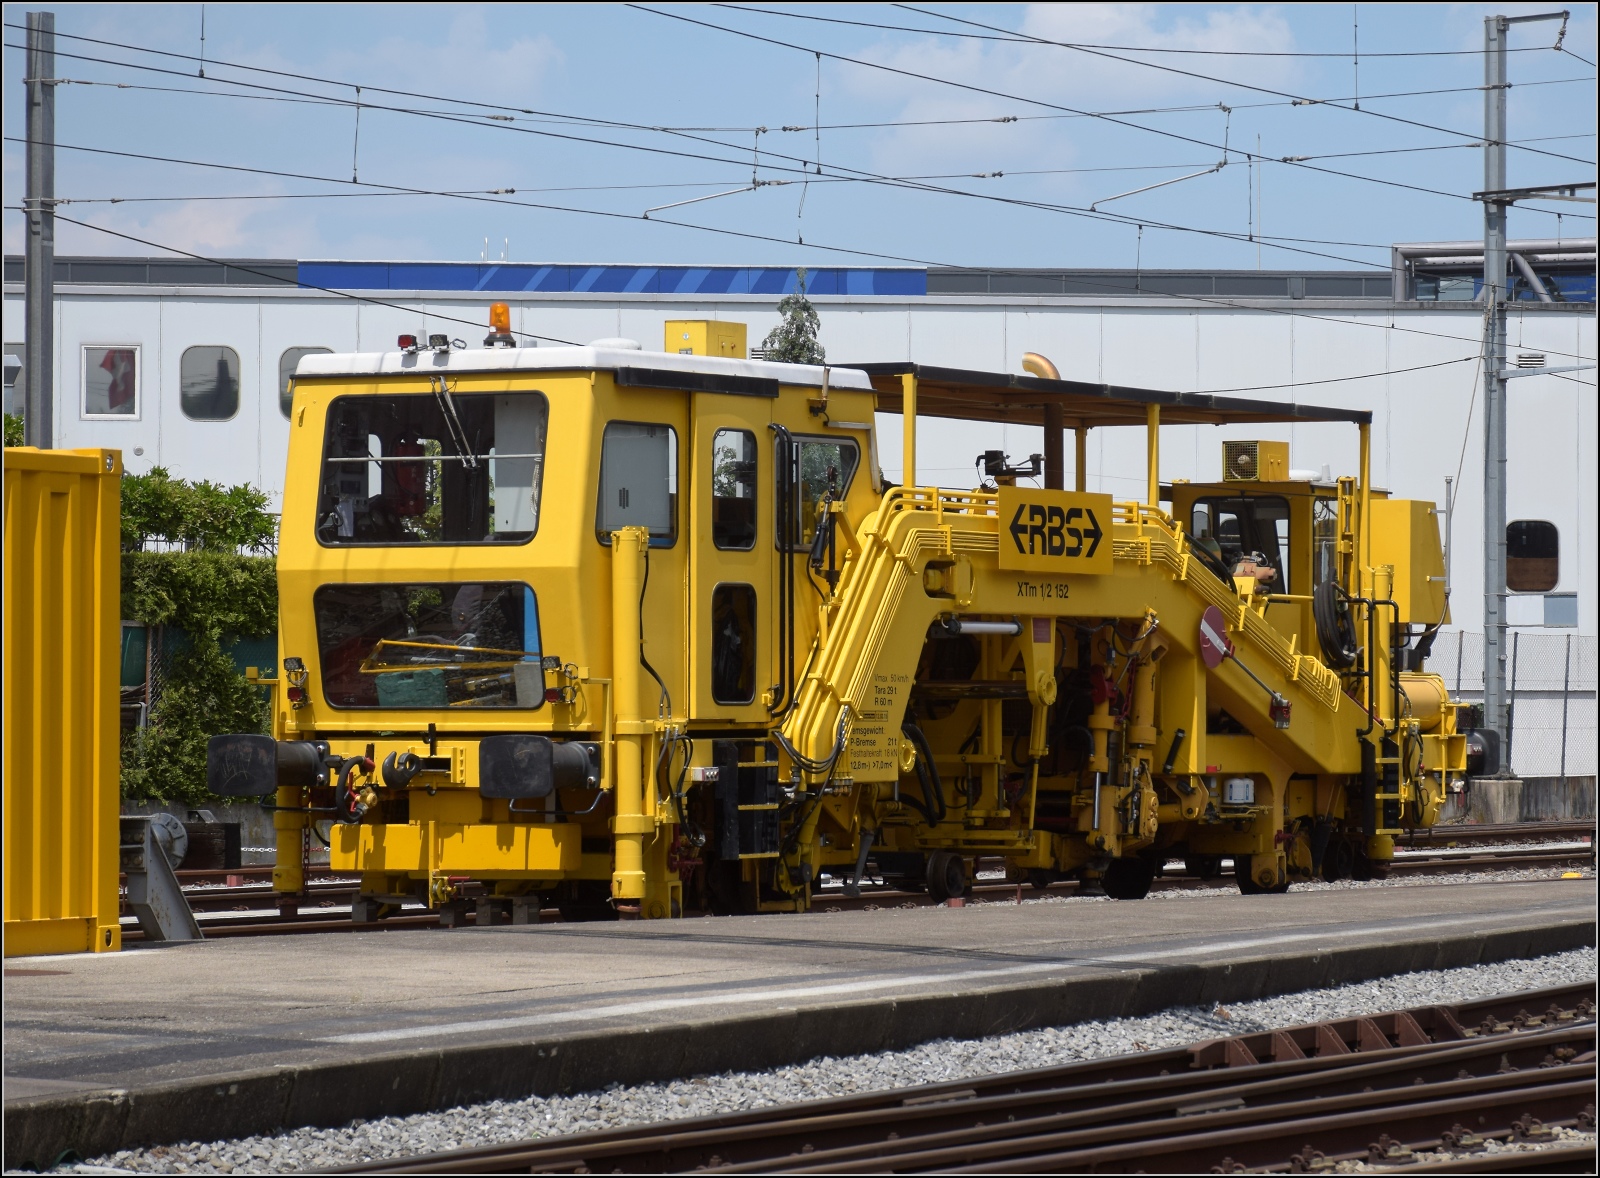 Gleisstopfmaschine Xtm 1/2 152 in Worblaufen. Juni 2023.